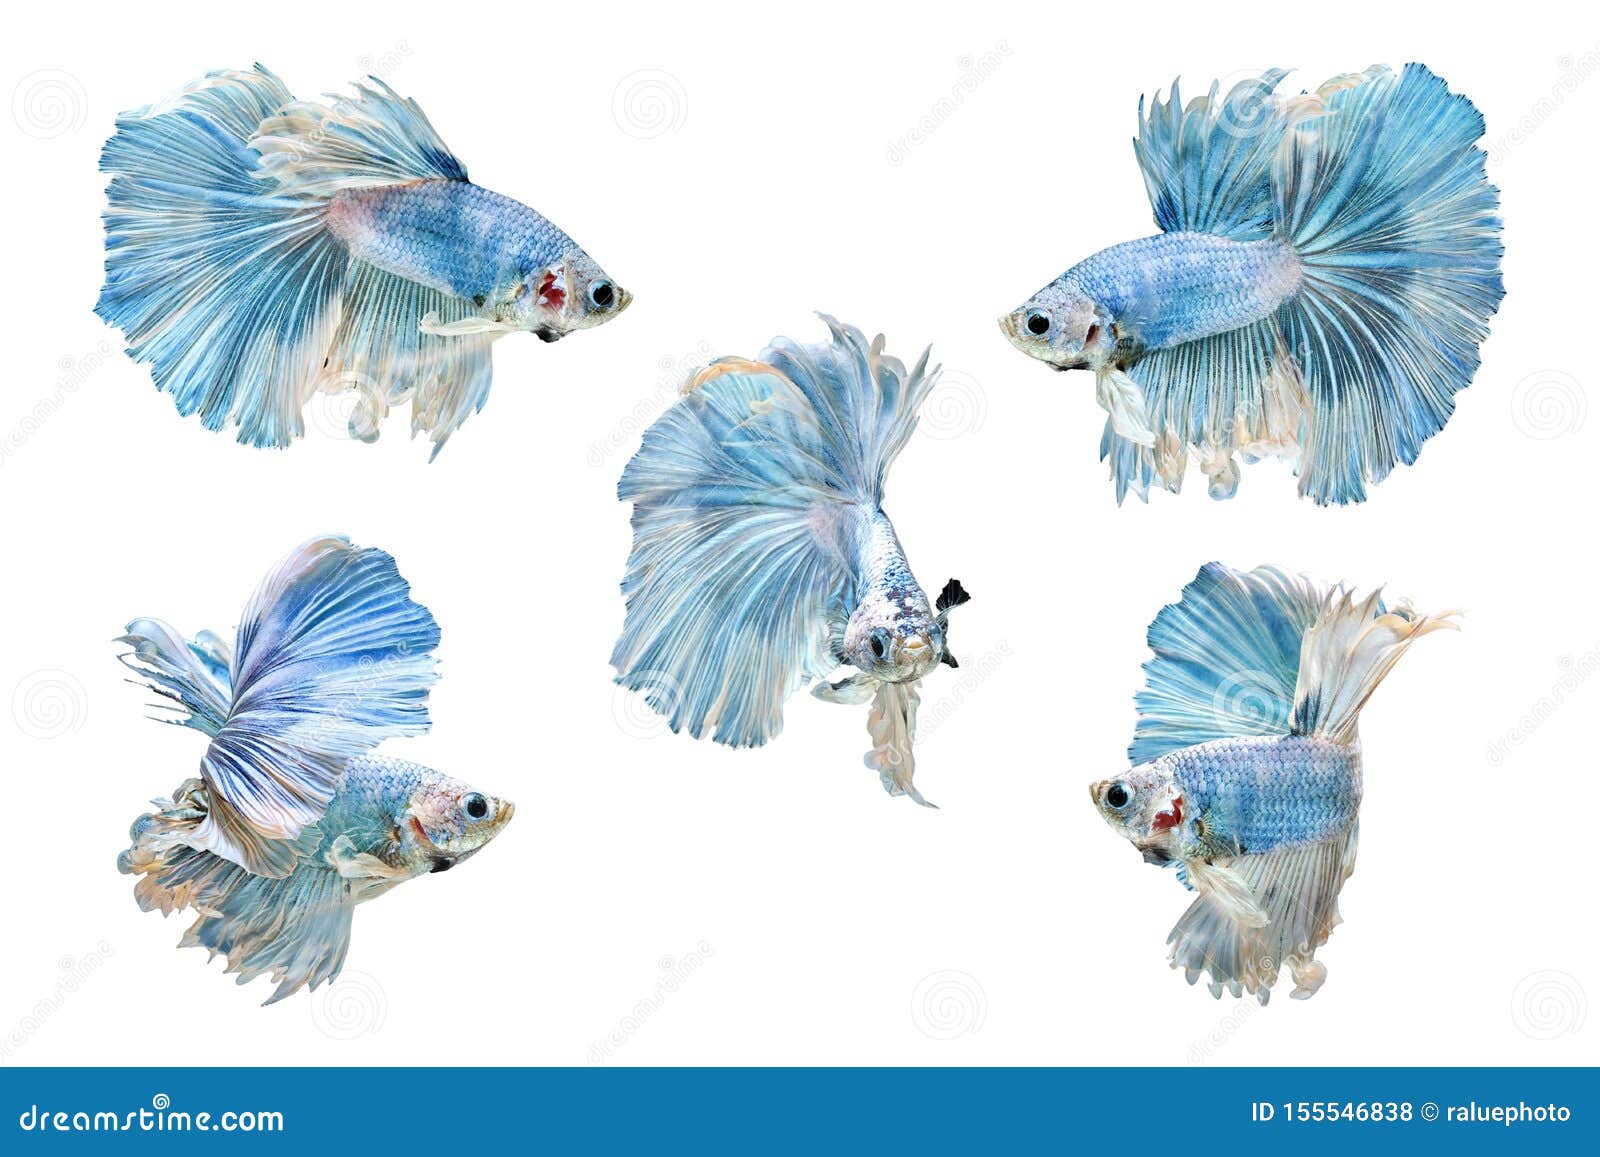 Collection of Siamese Fighting Fish, Blue Betta Fish on White Background,  Half Moon Stock Photo - Image of betta, animal: 155546838